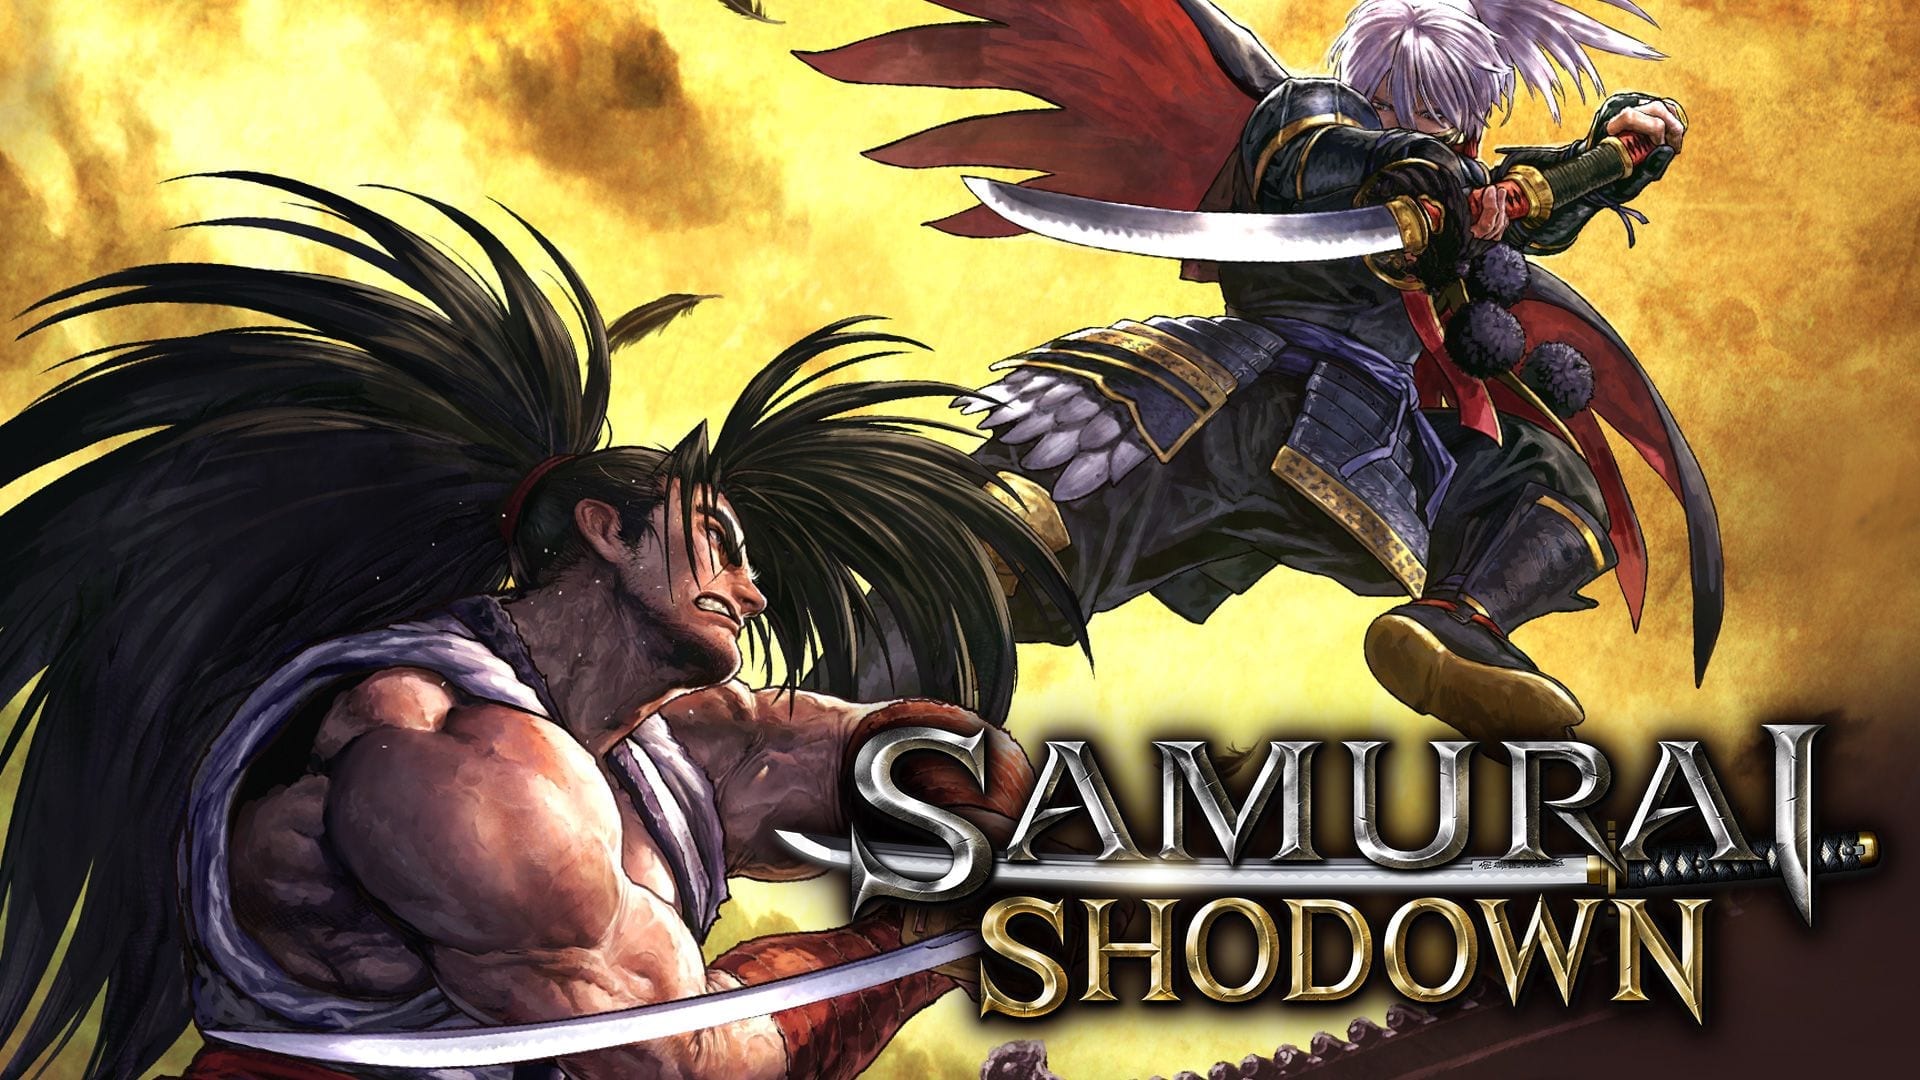 Samurai Shodown Releases On February 25 In Australia & New Zealand For The Nintendo Switch